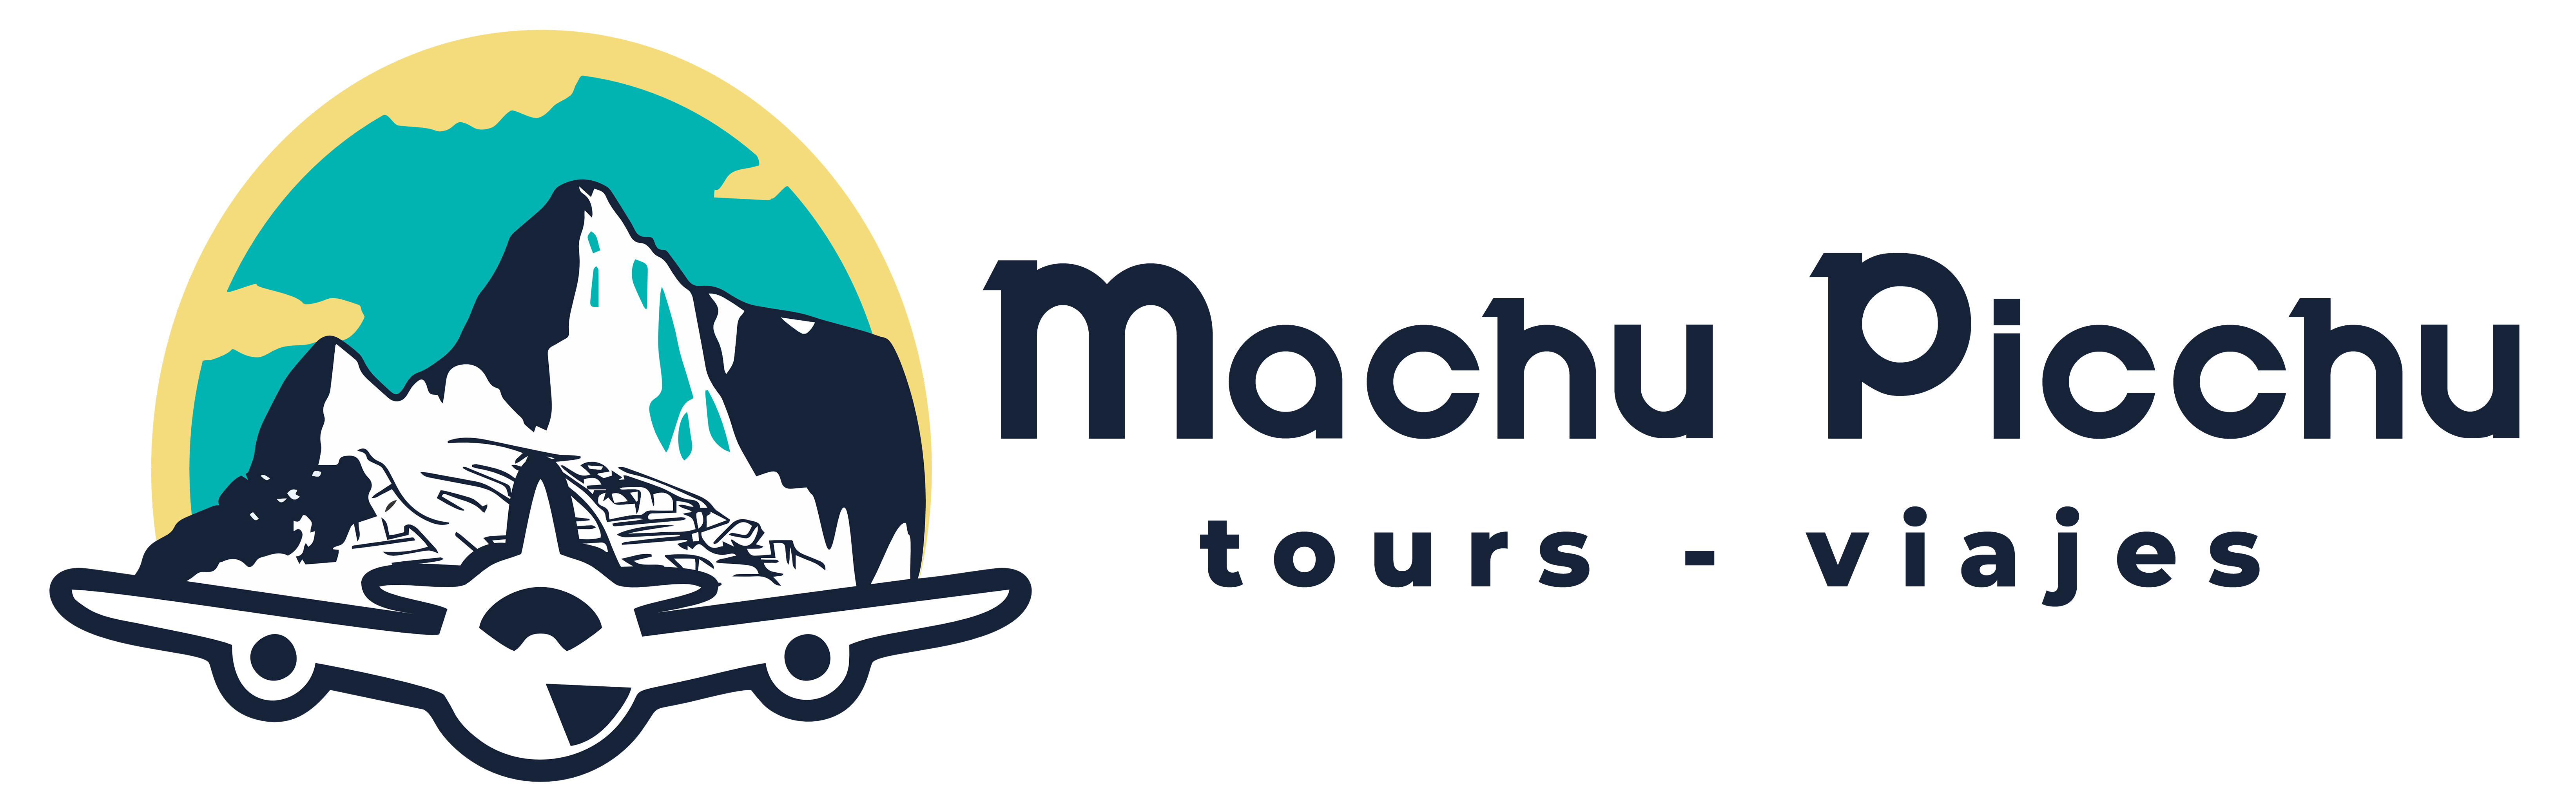 Viajes a Machu Picchu :: Tours en Machupicchu, Cusco y Perú